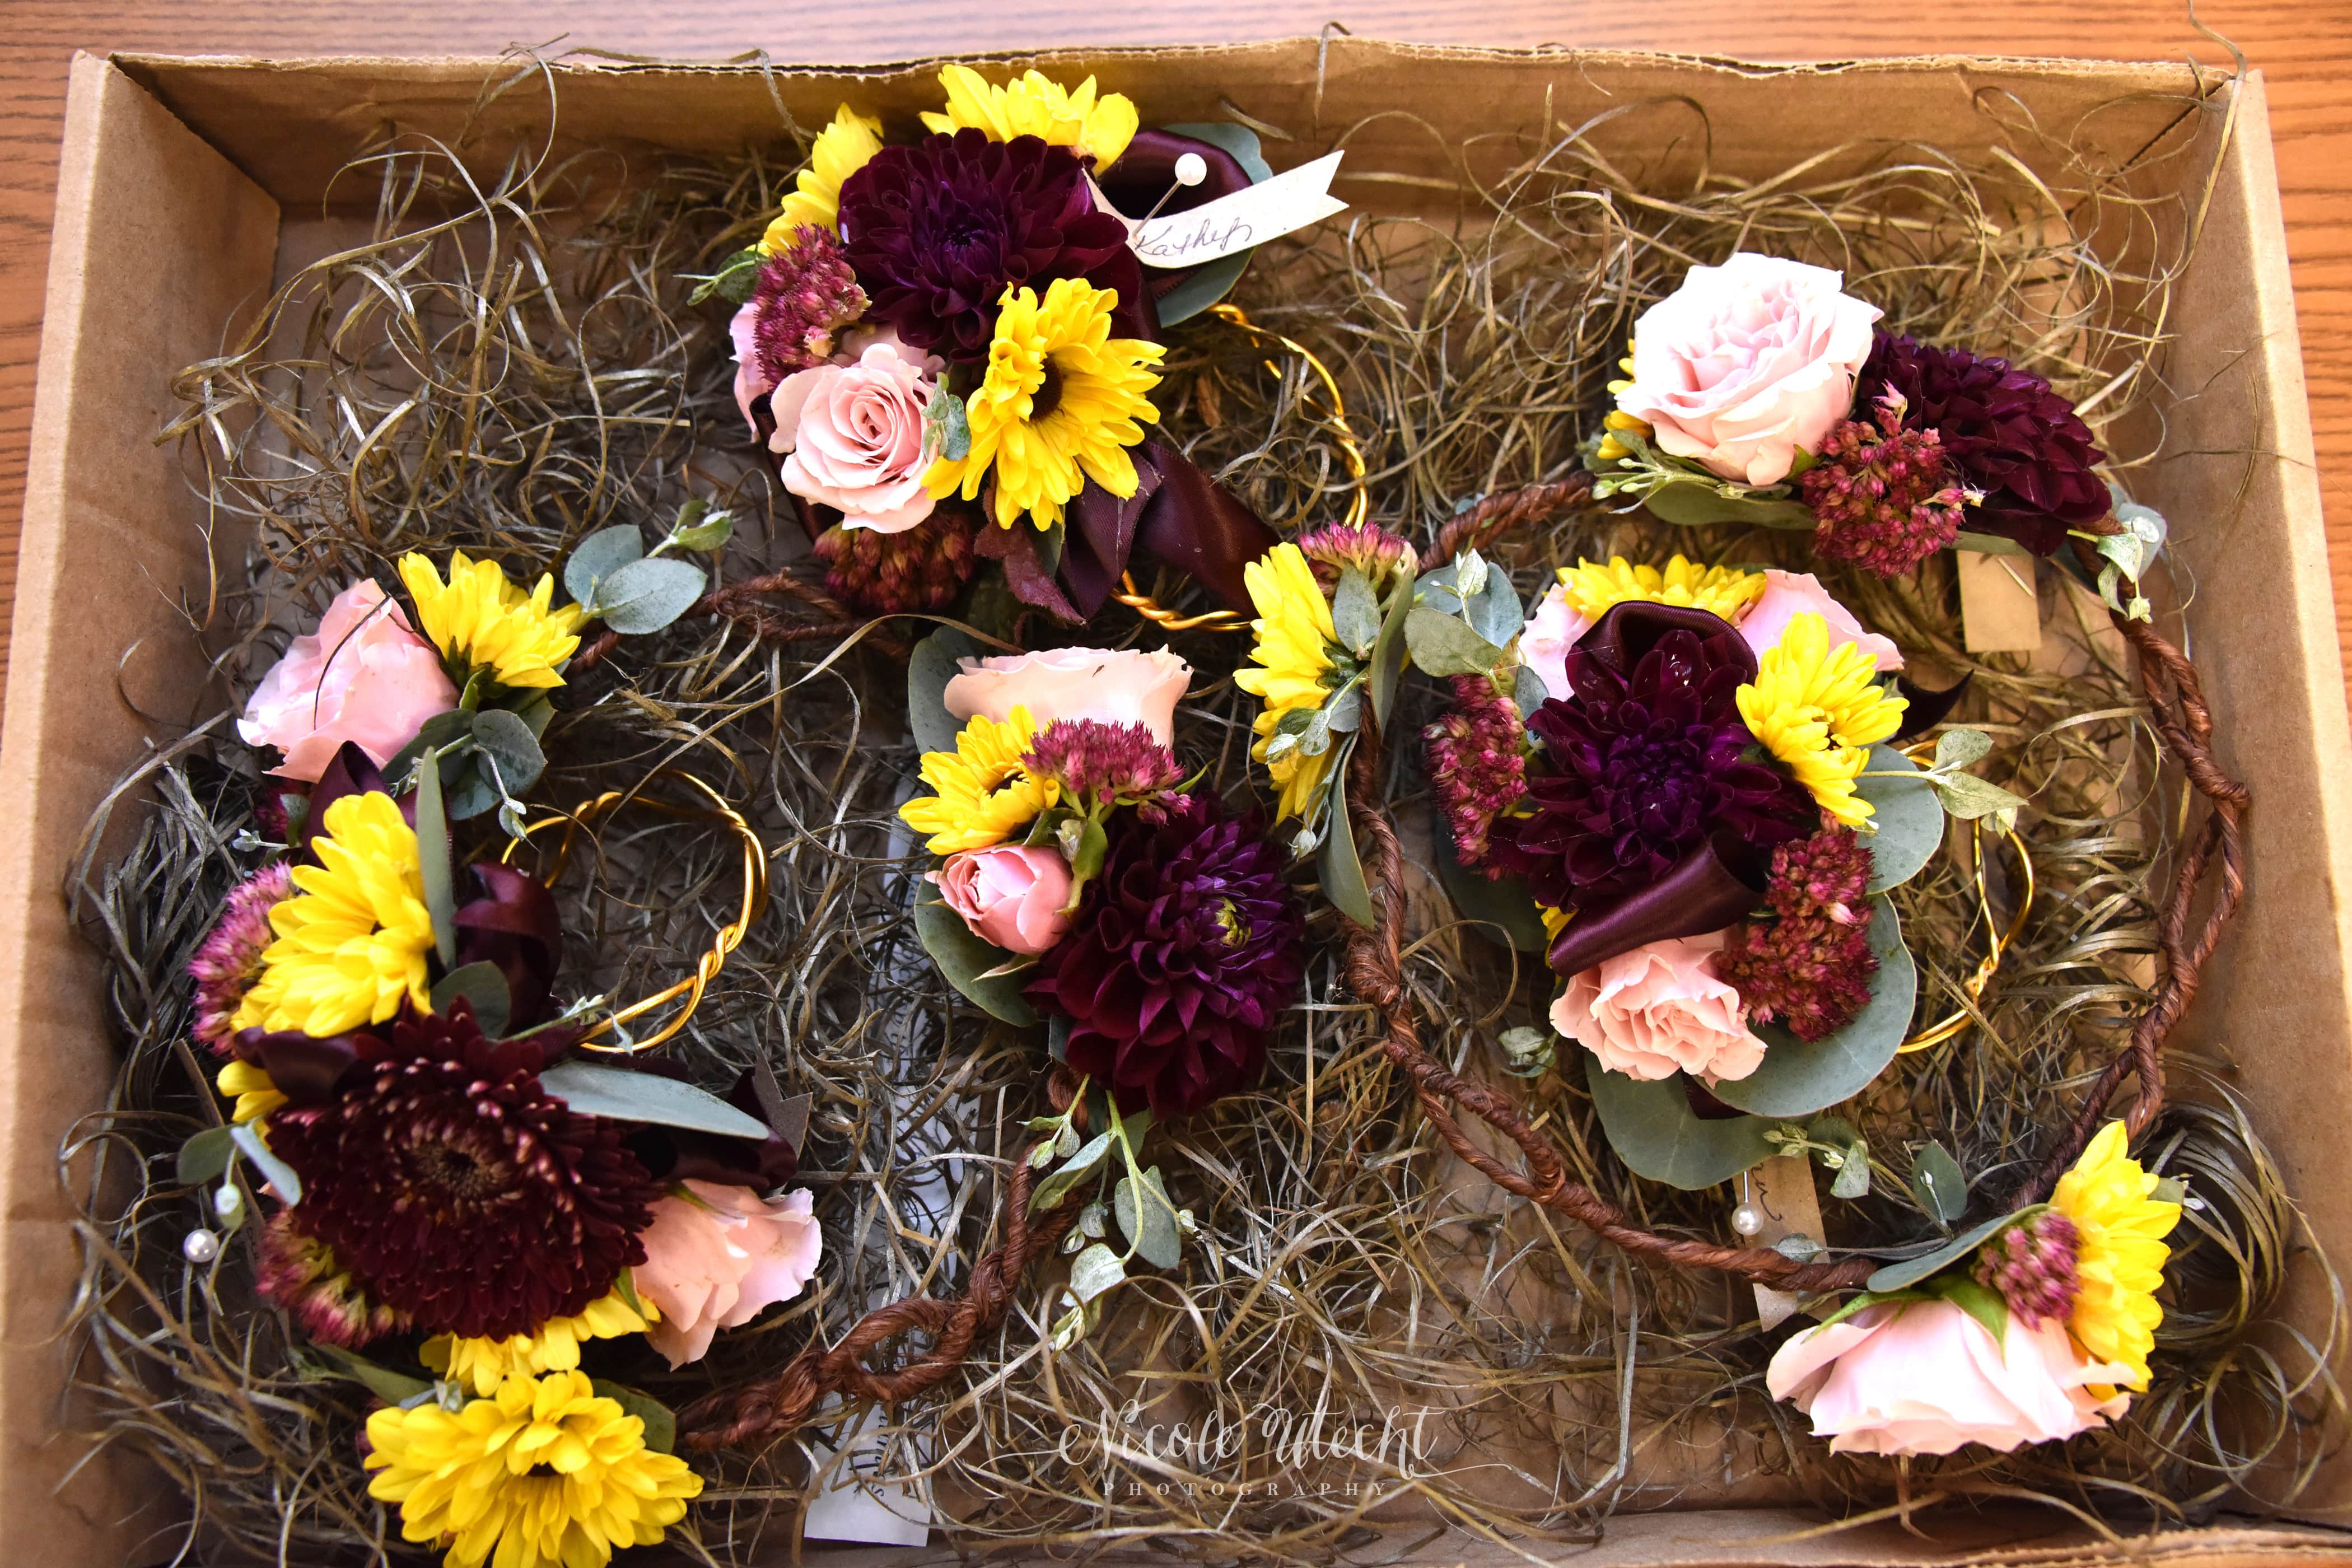 Robin's Nest Floral Weddings, Oshkosh WI